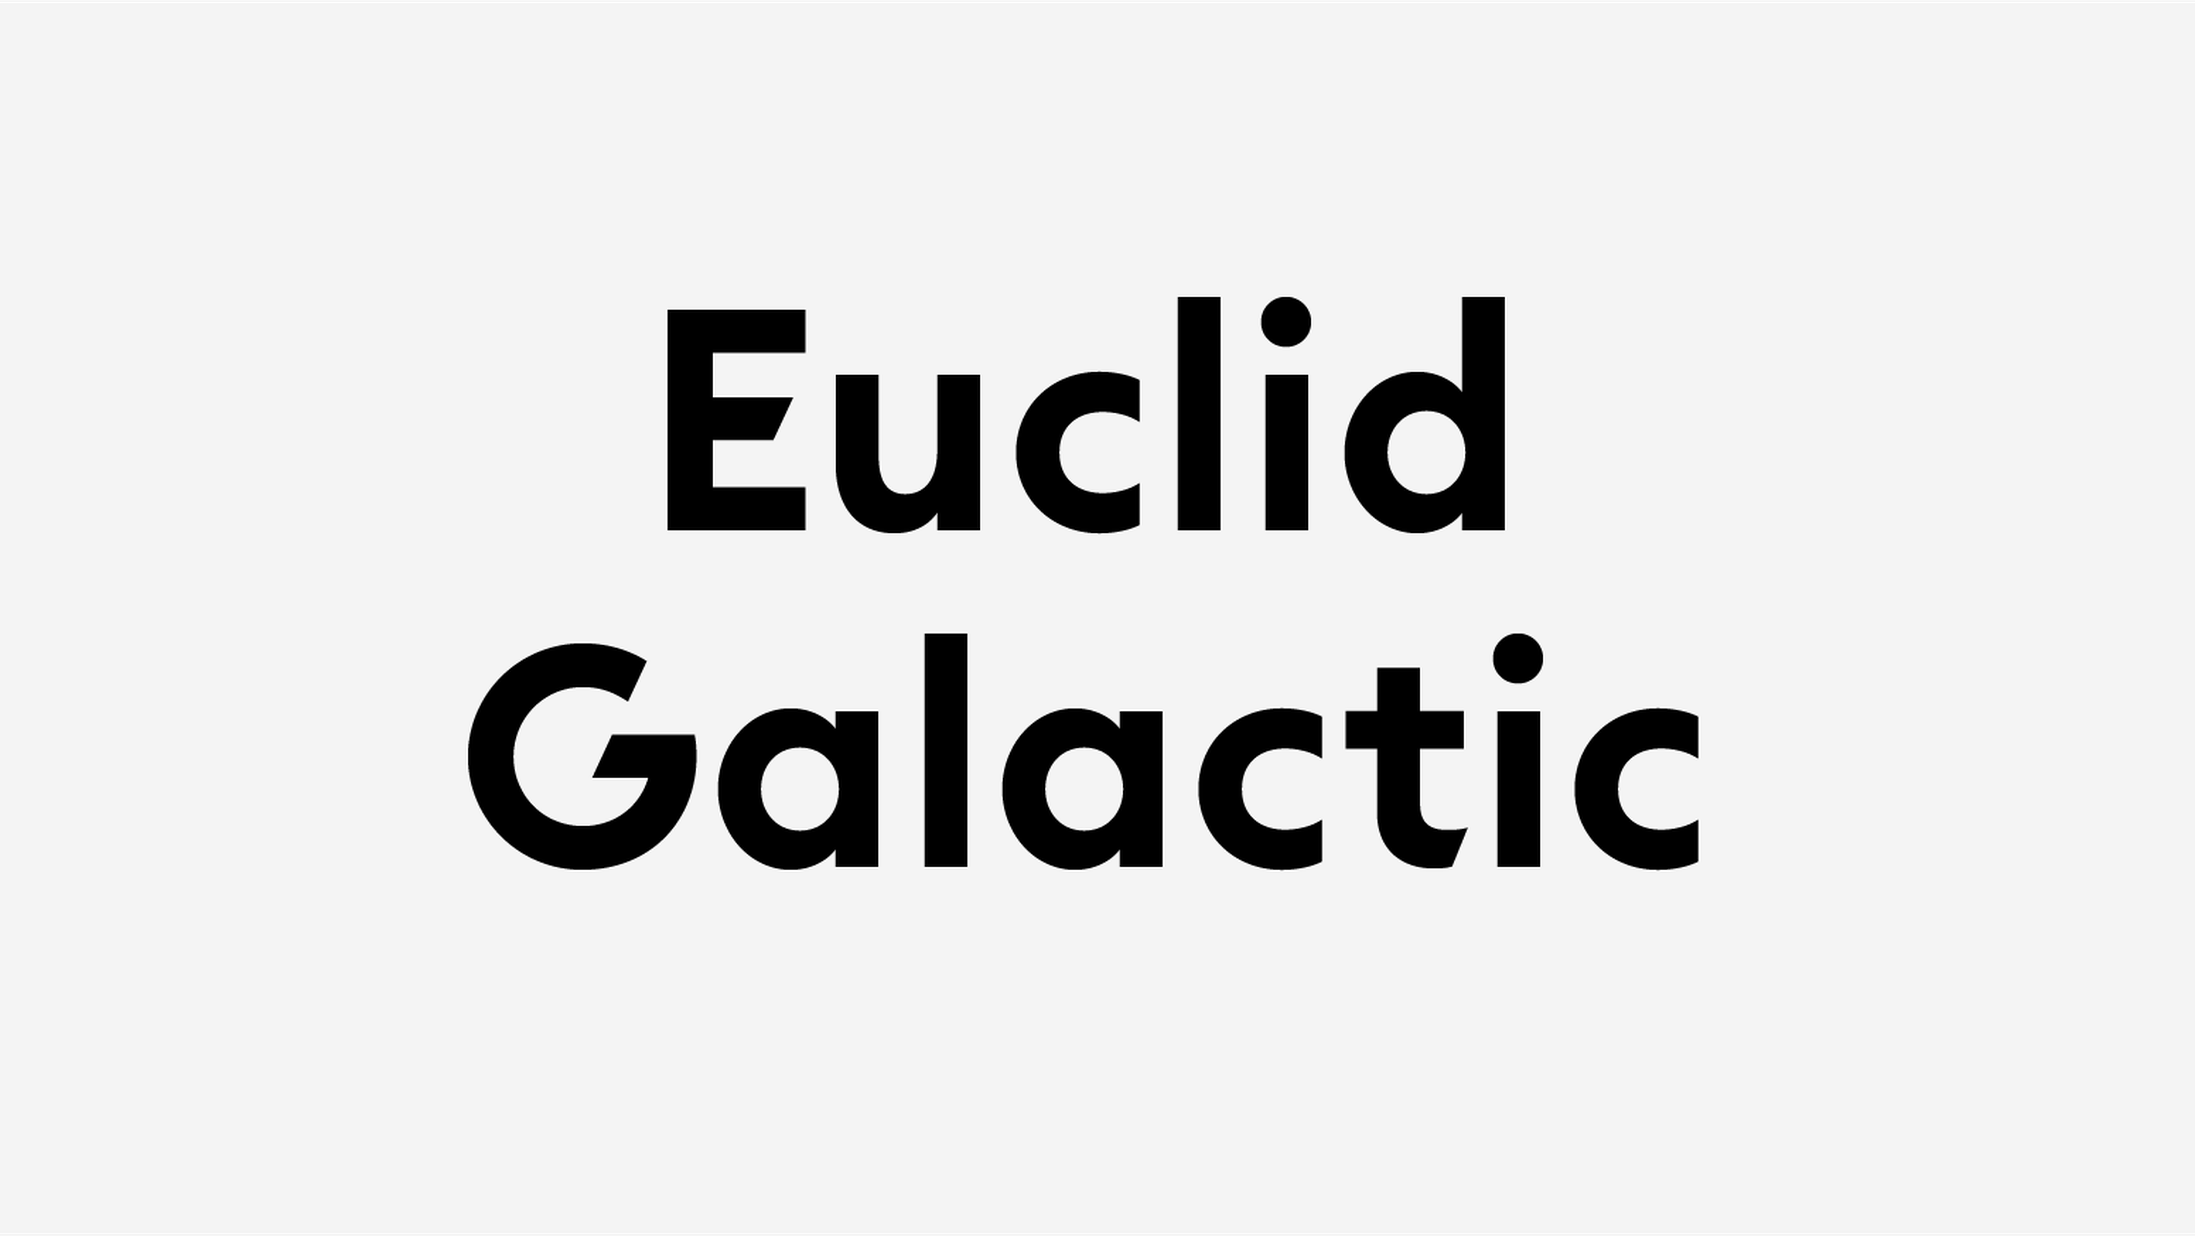 Przykład czcionki Euclid Galactic